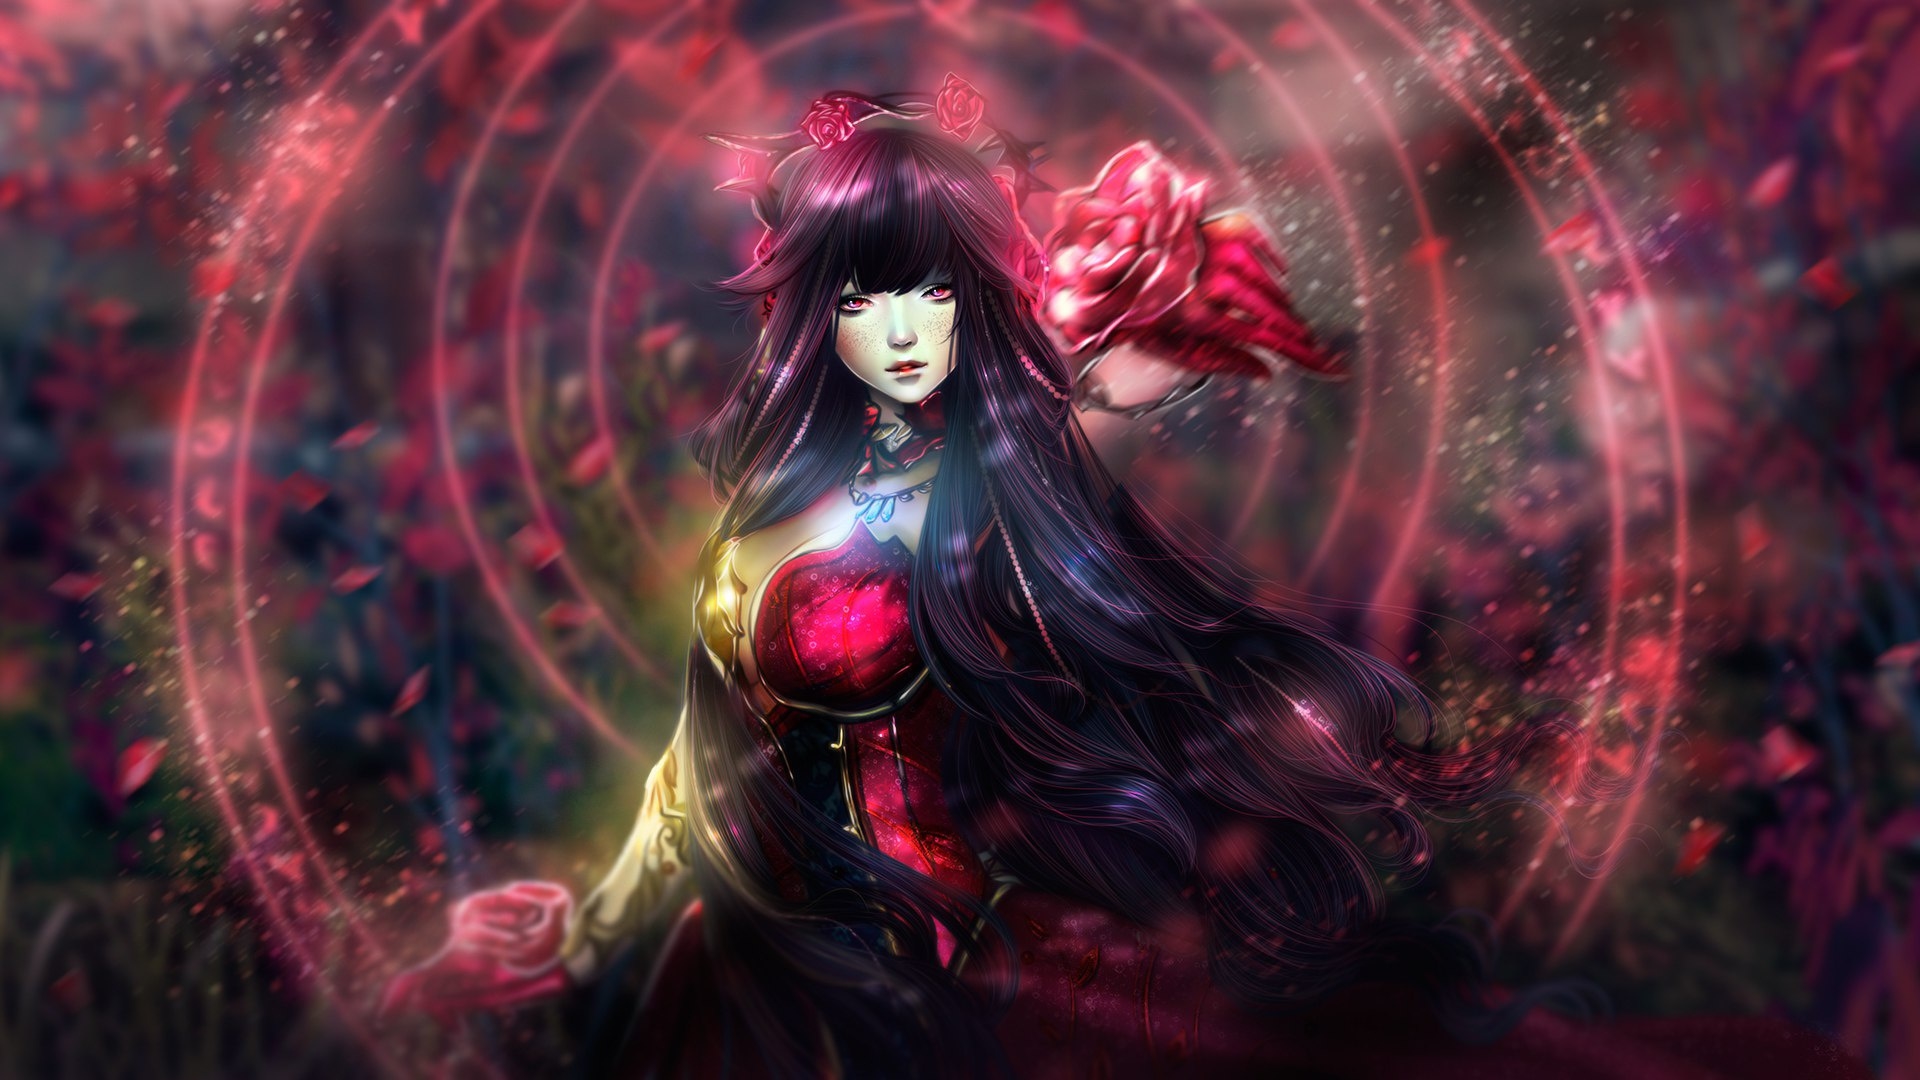 Fantasy World - Other & Anime Background Wallpapers on Desktop Nexus (Image  1428937)